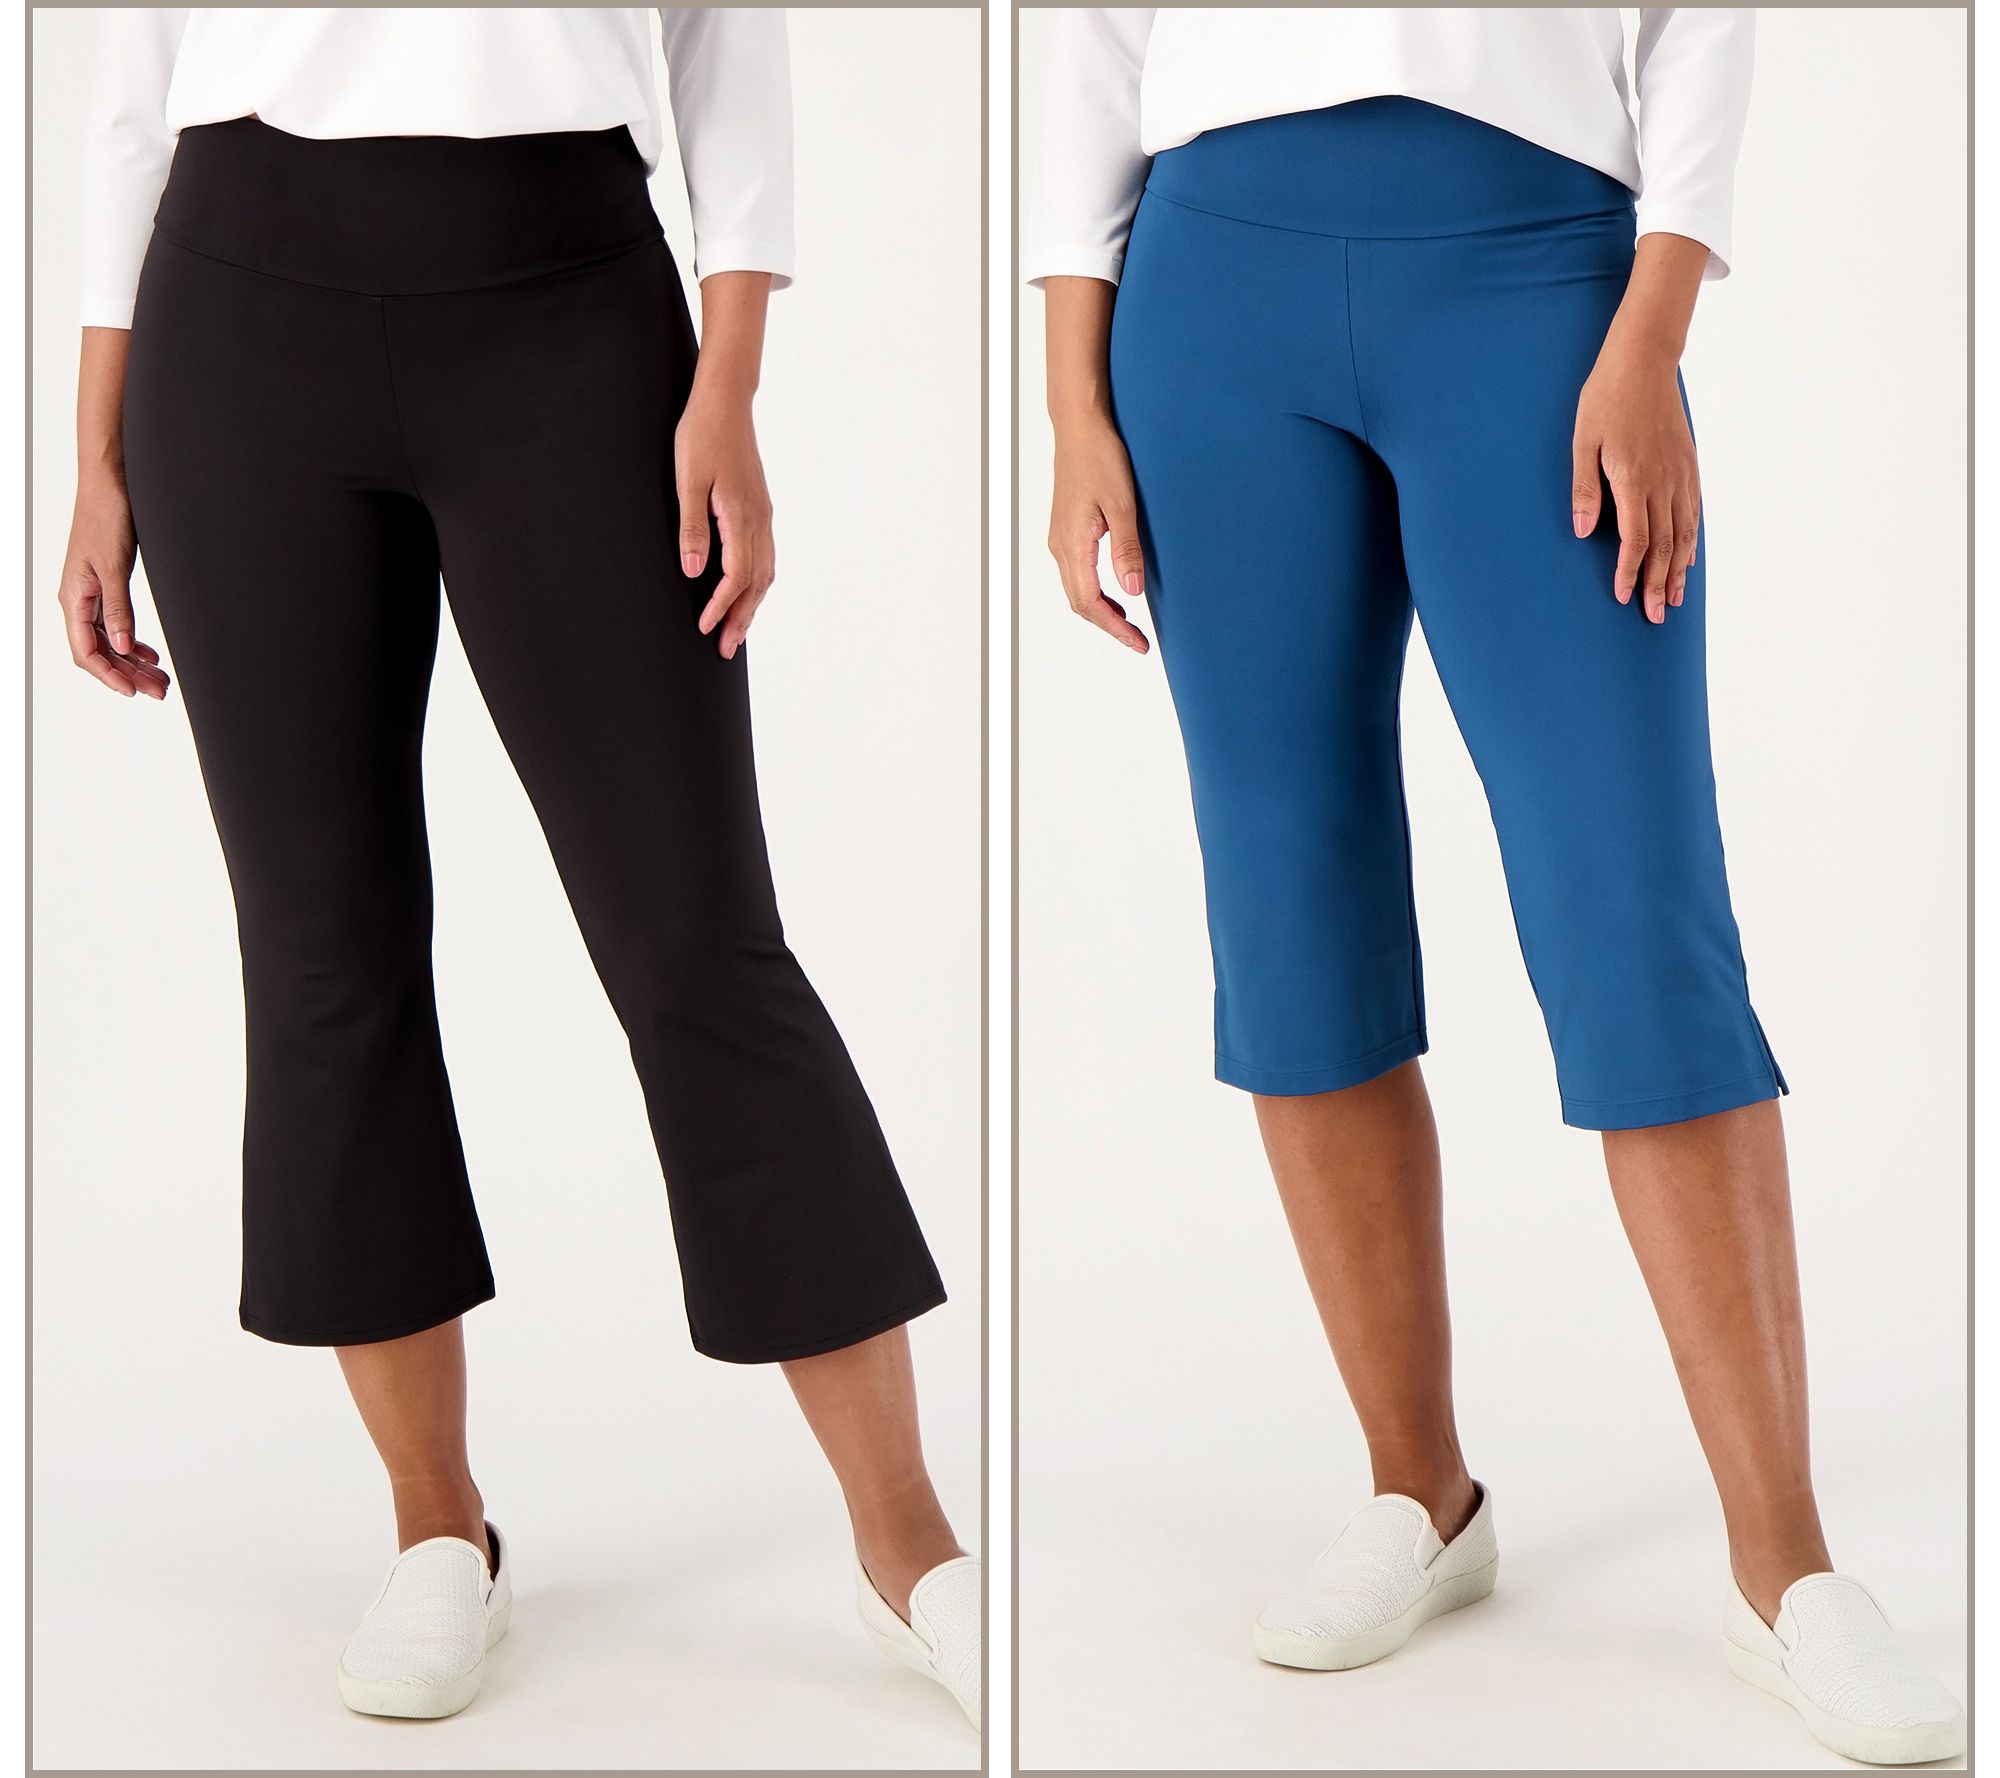 Buy Women's Cotton Lycra 3/4th Capri Leggings Pack of 2 Skin at